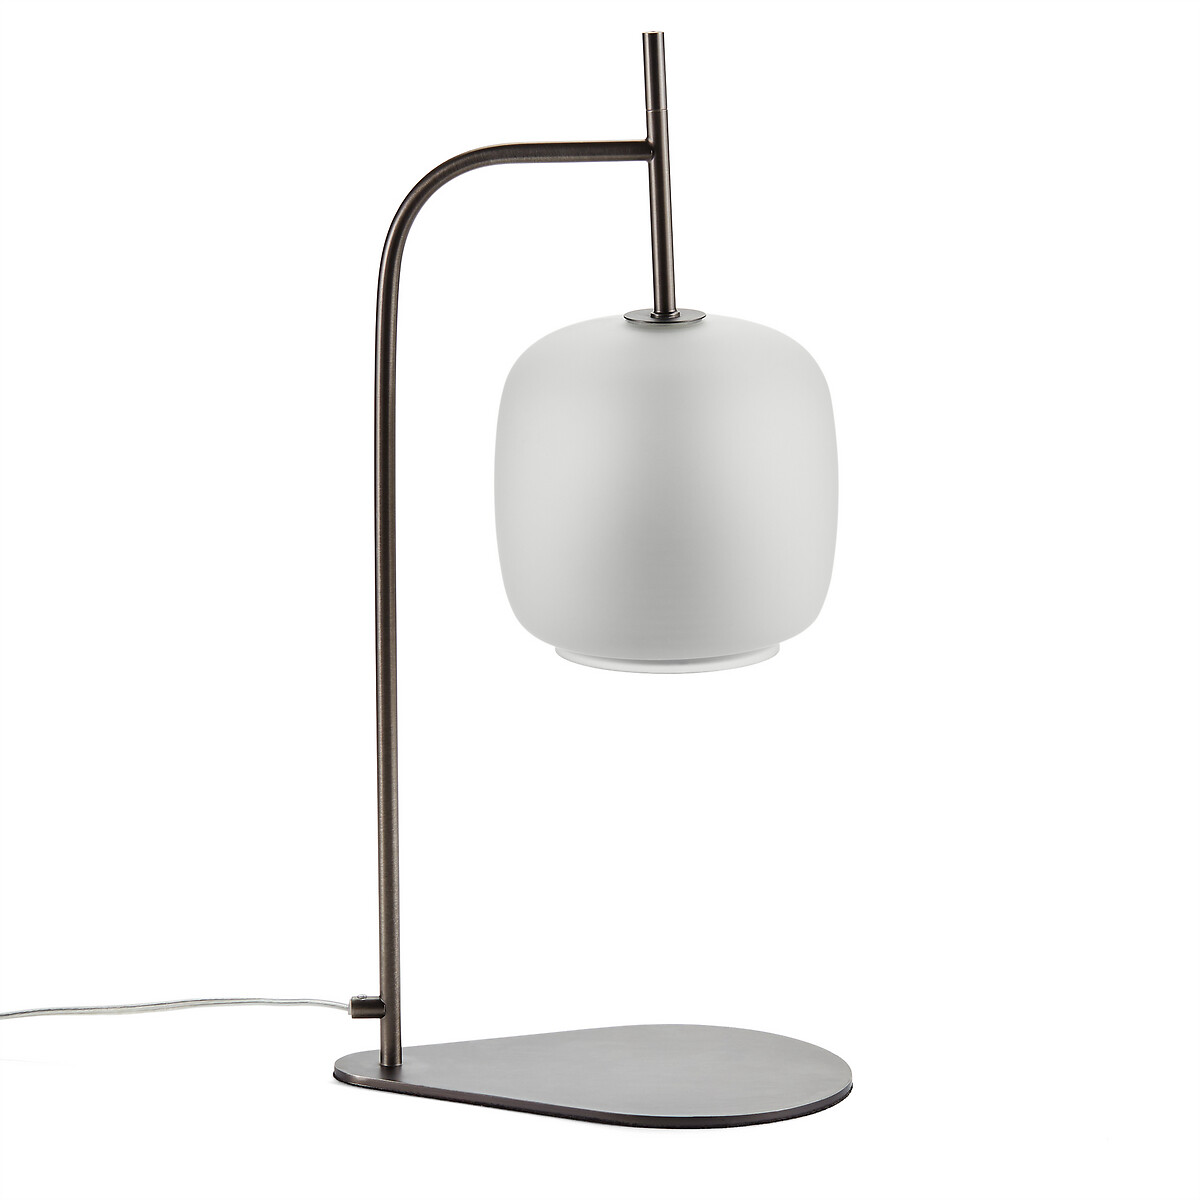 Лампа Misuto дизайн Э Галлины единый размер черный